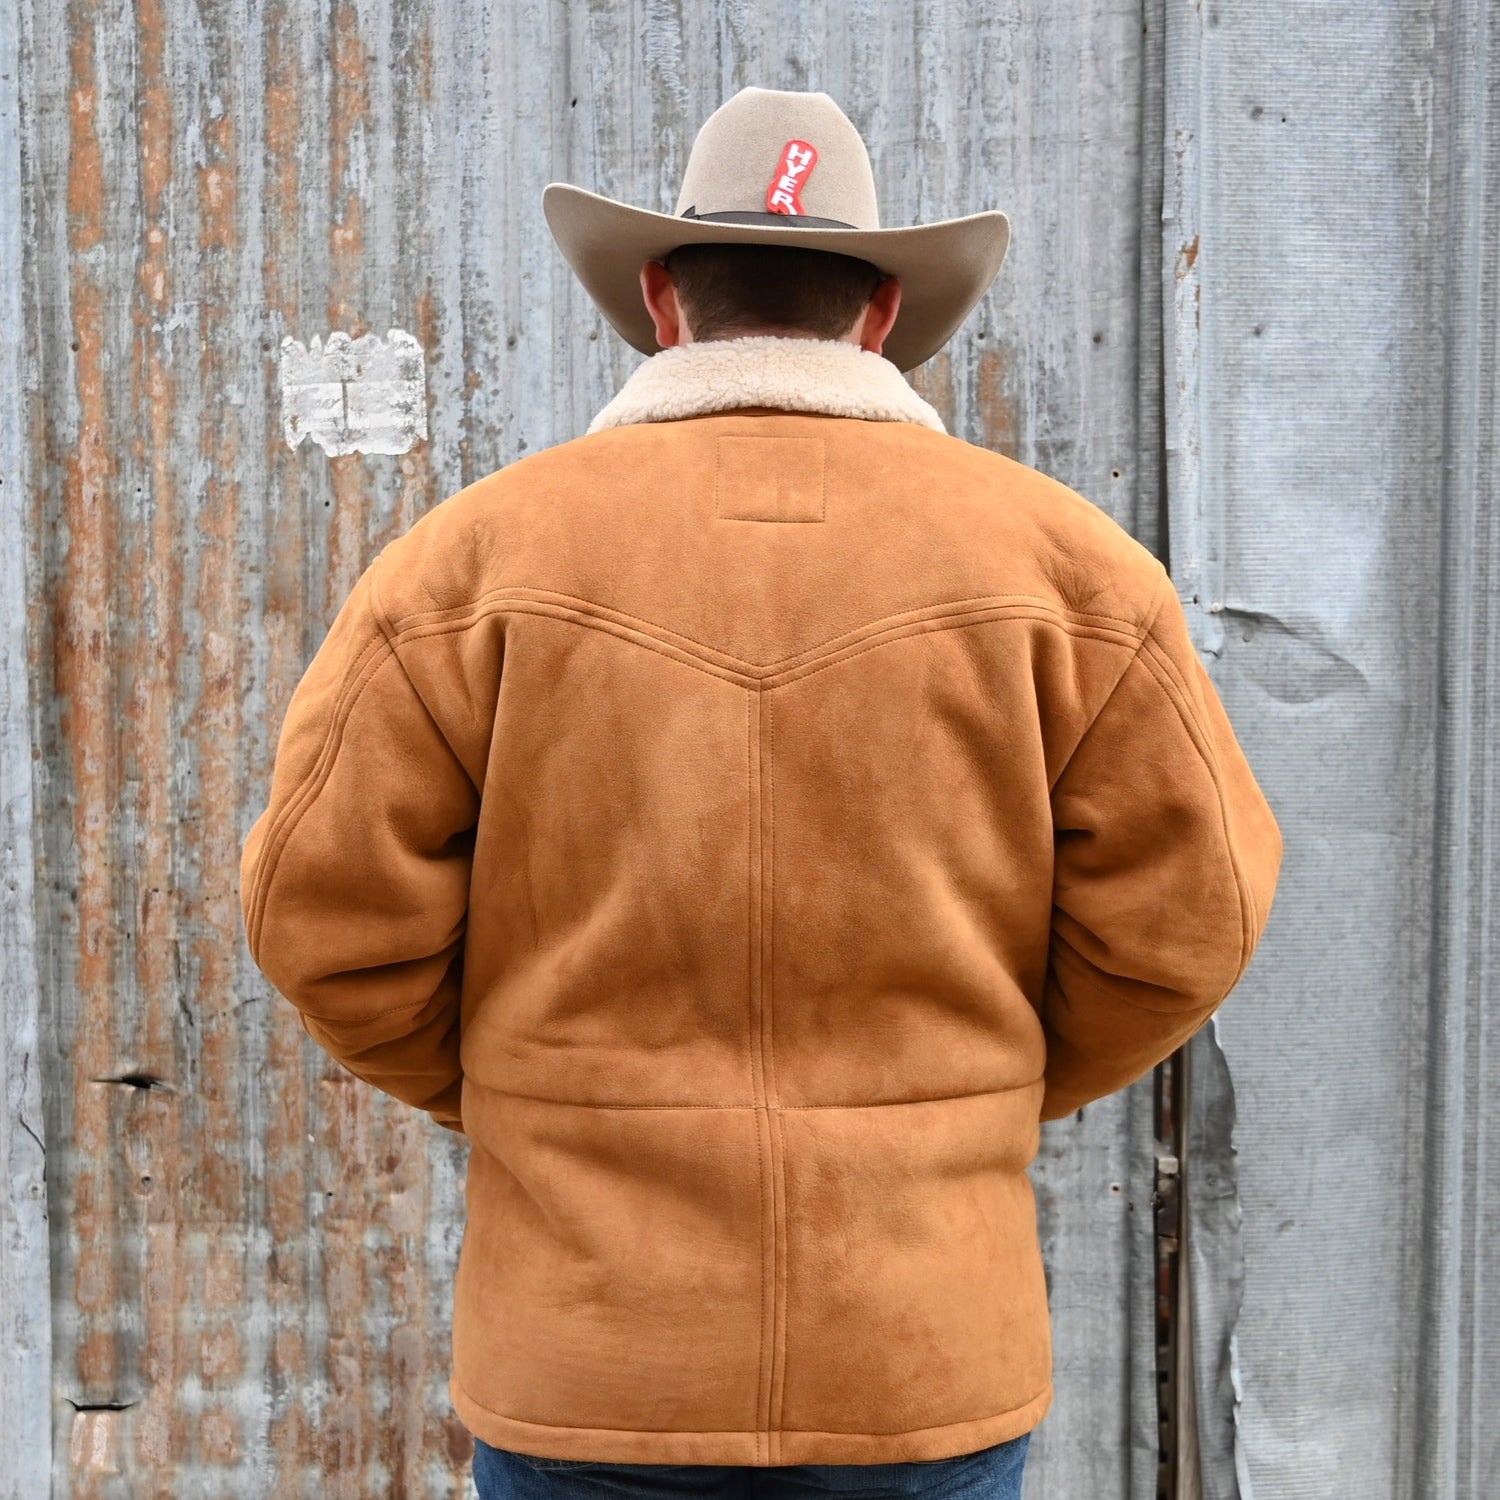 Schaefer Mens Shearling Coat view of back of jacket